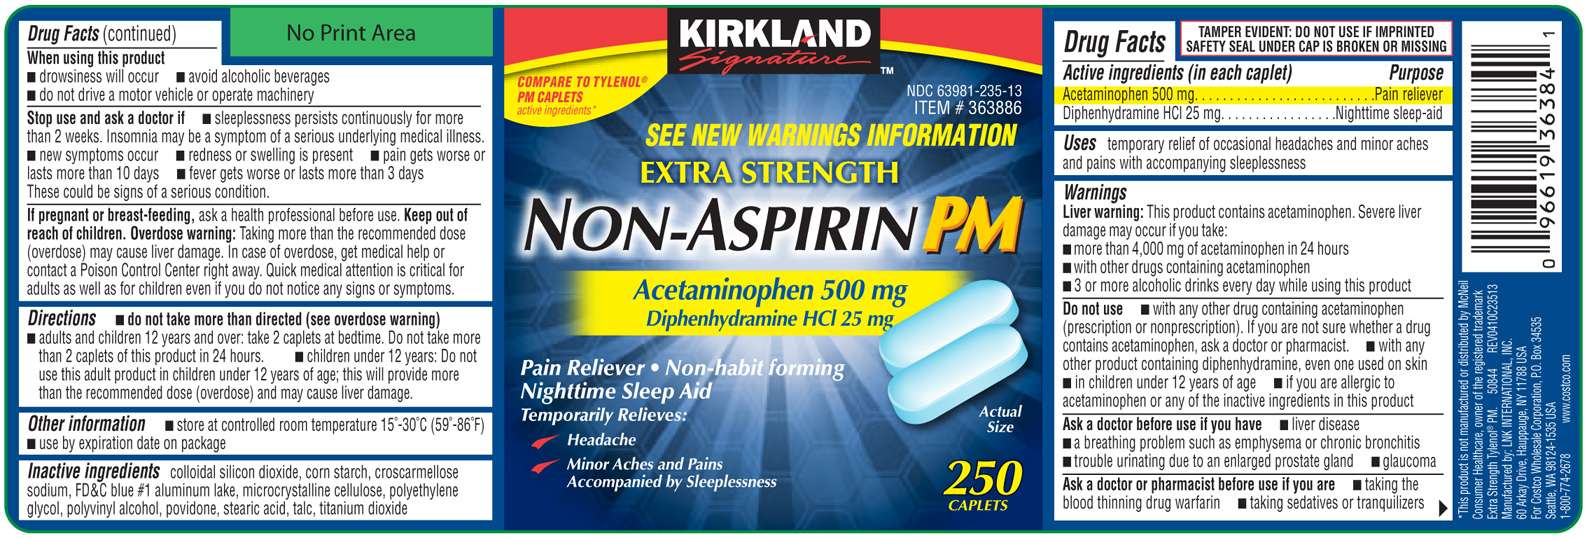 Extra Strength Non-Aspirin PM